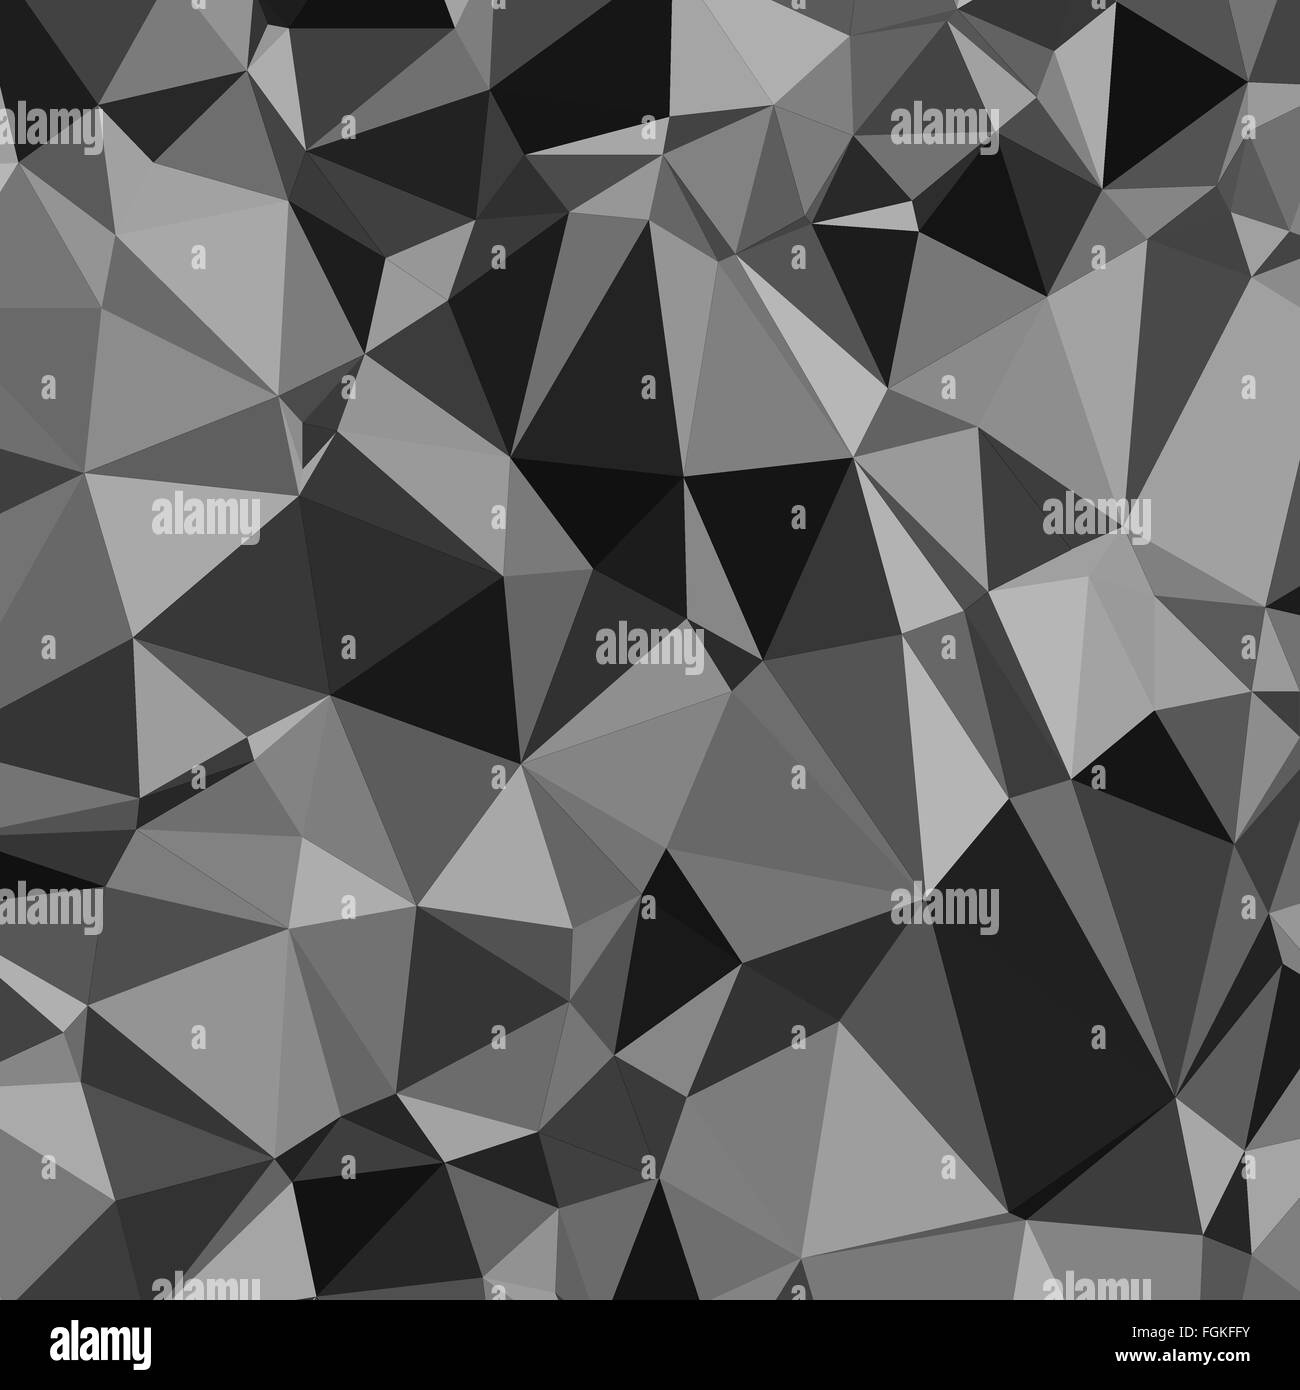 Abstrakte schwarz-weiß Dreieck Muster Tapete Hintergrunddesign 10 Eps-Vektor-illustration Stock Vektor